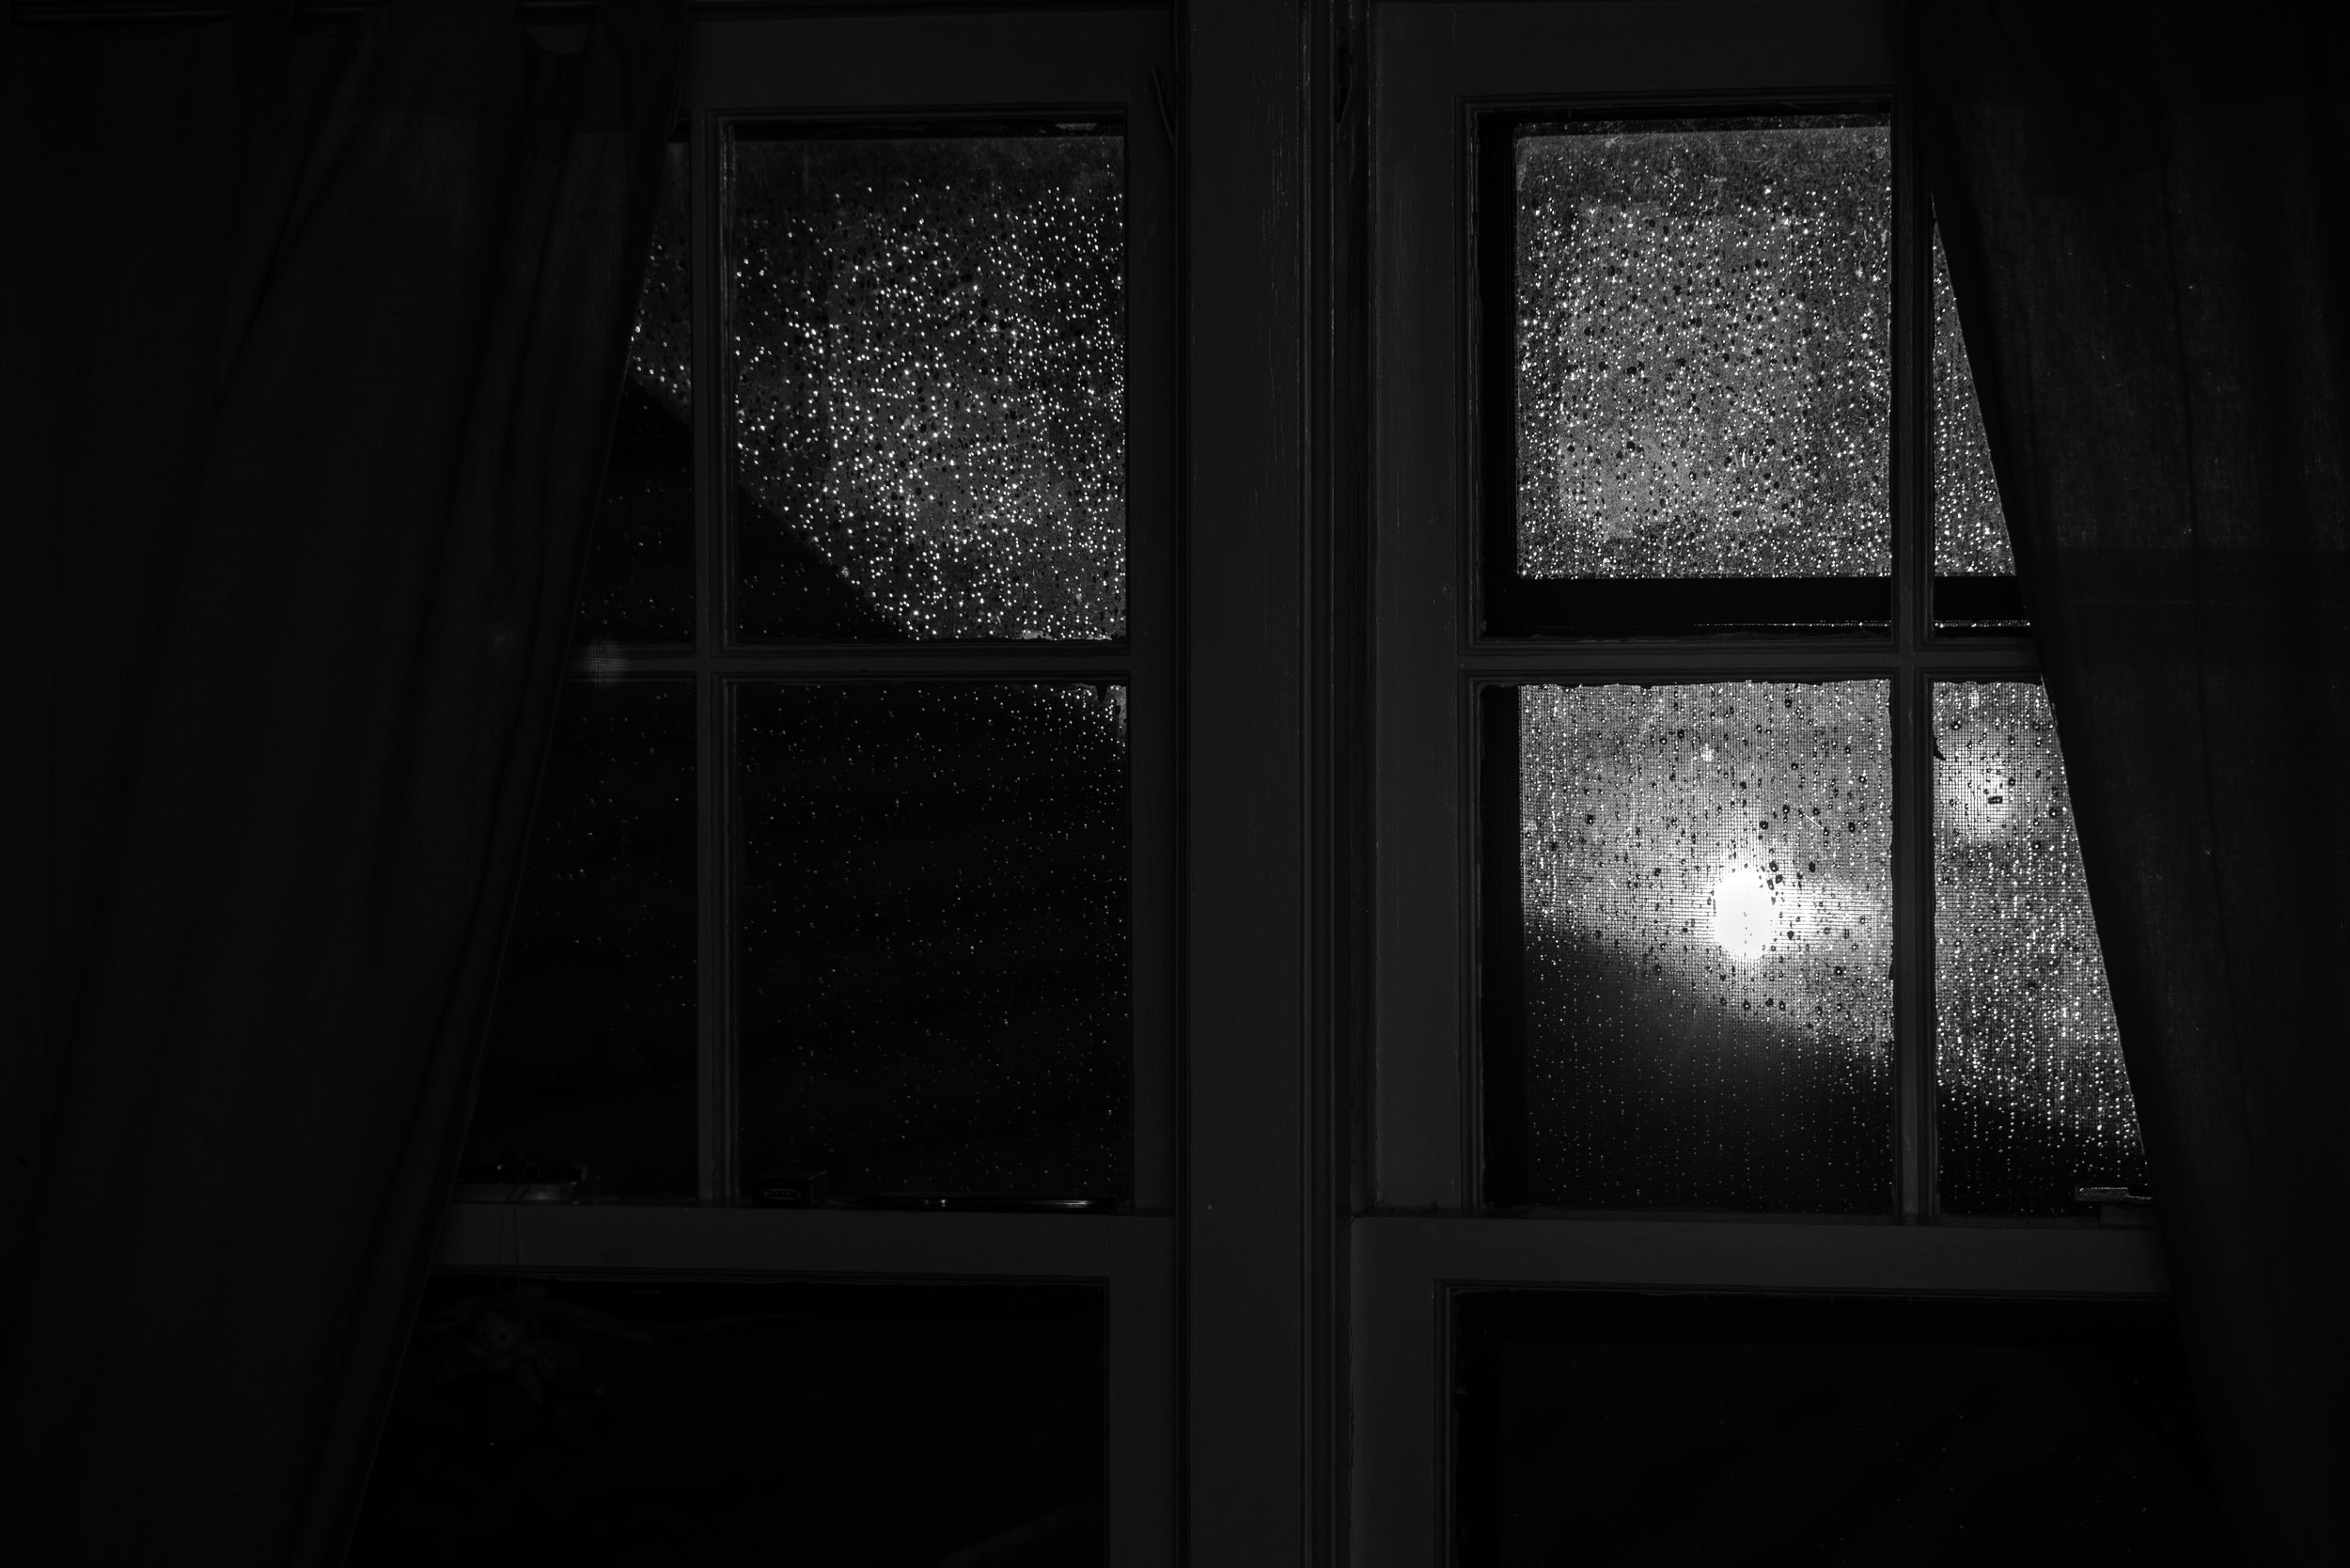 rainy window night scene.jpg